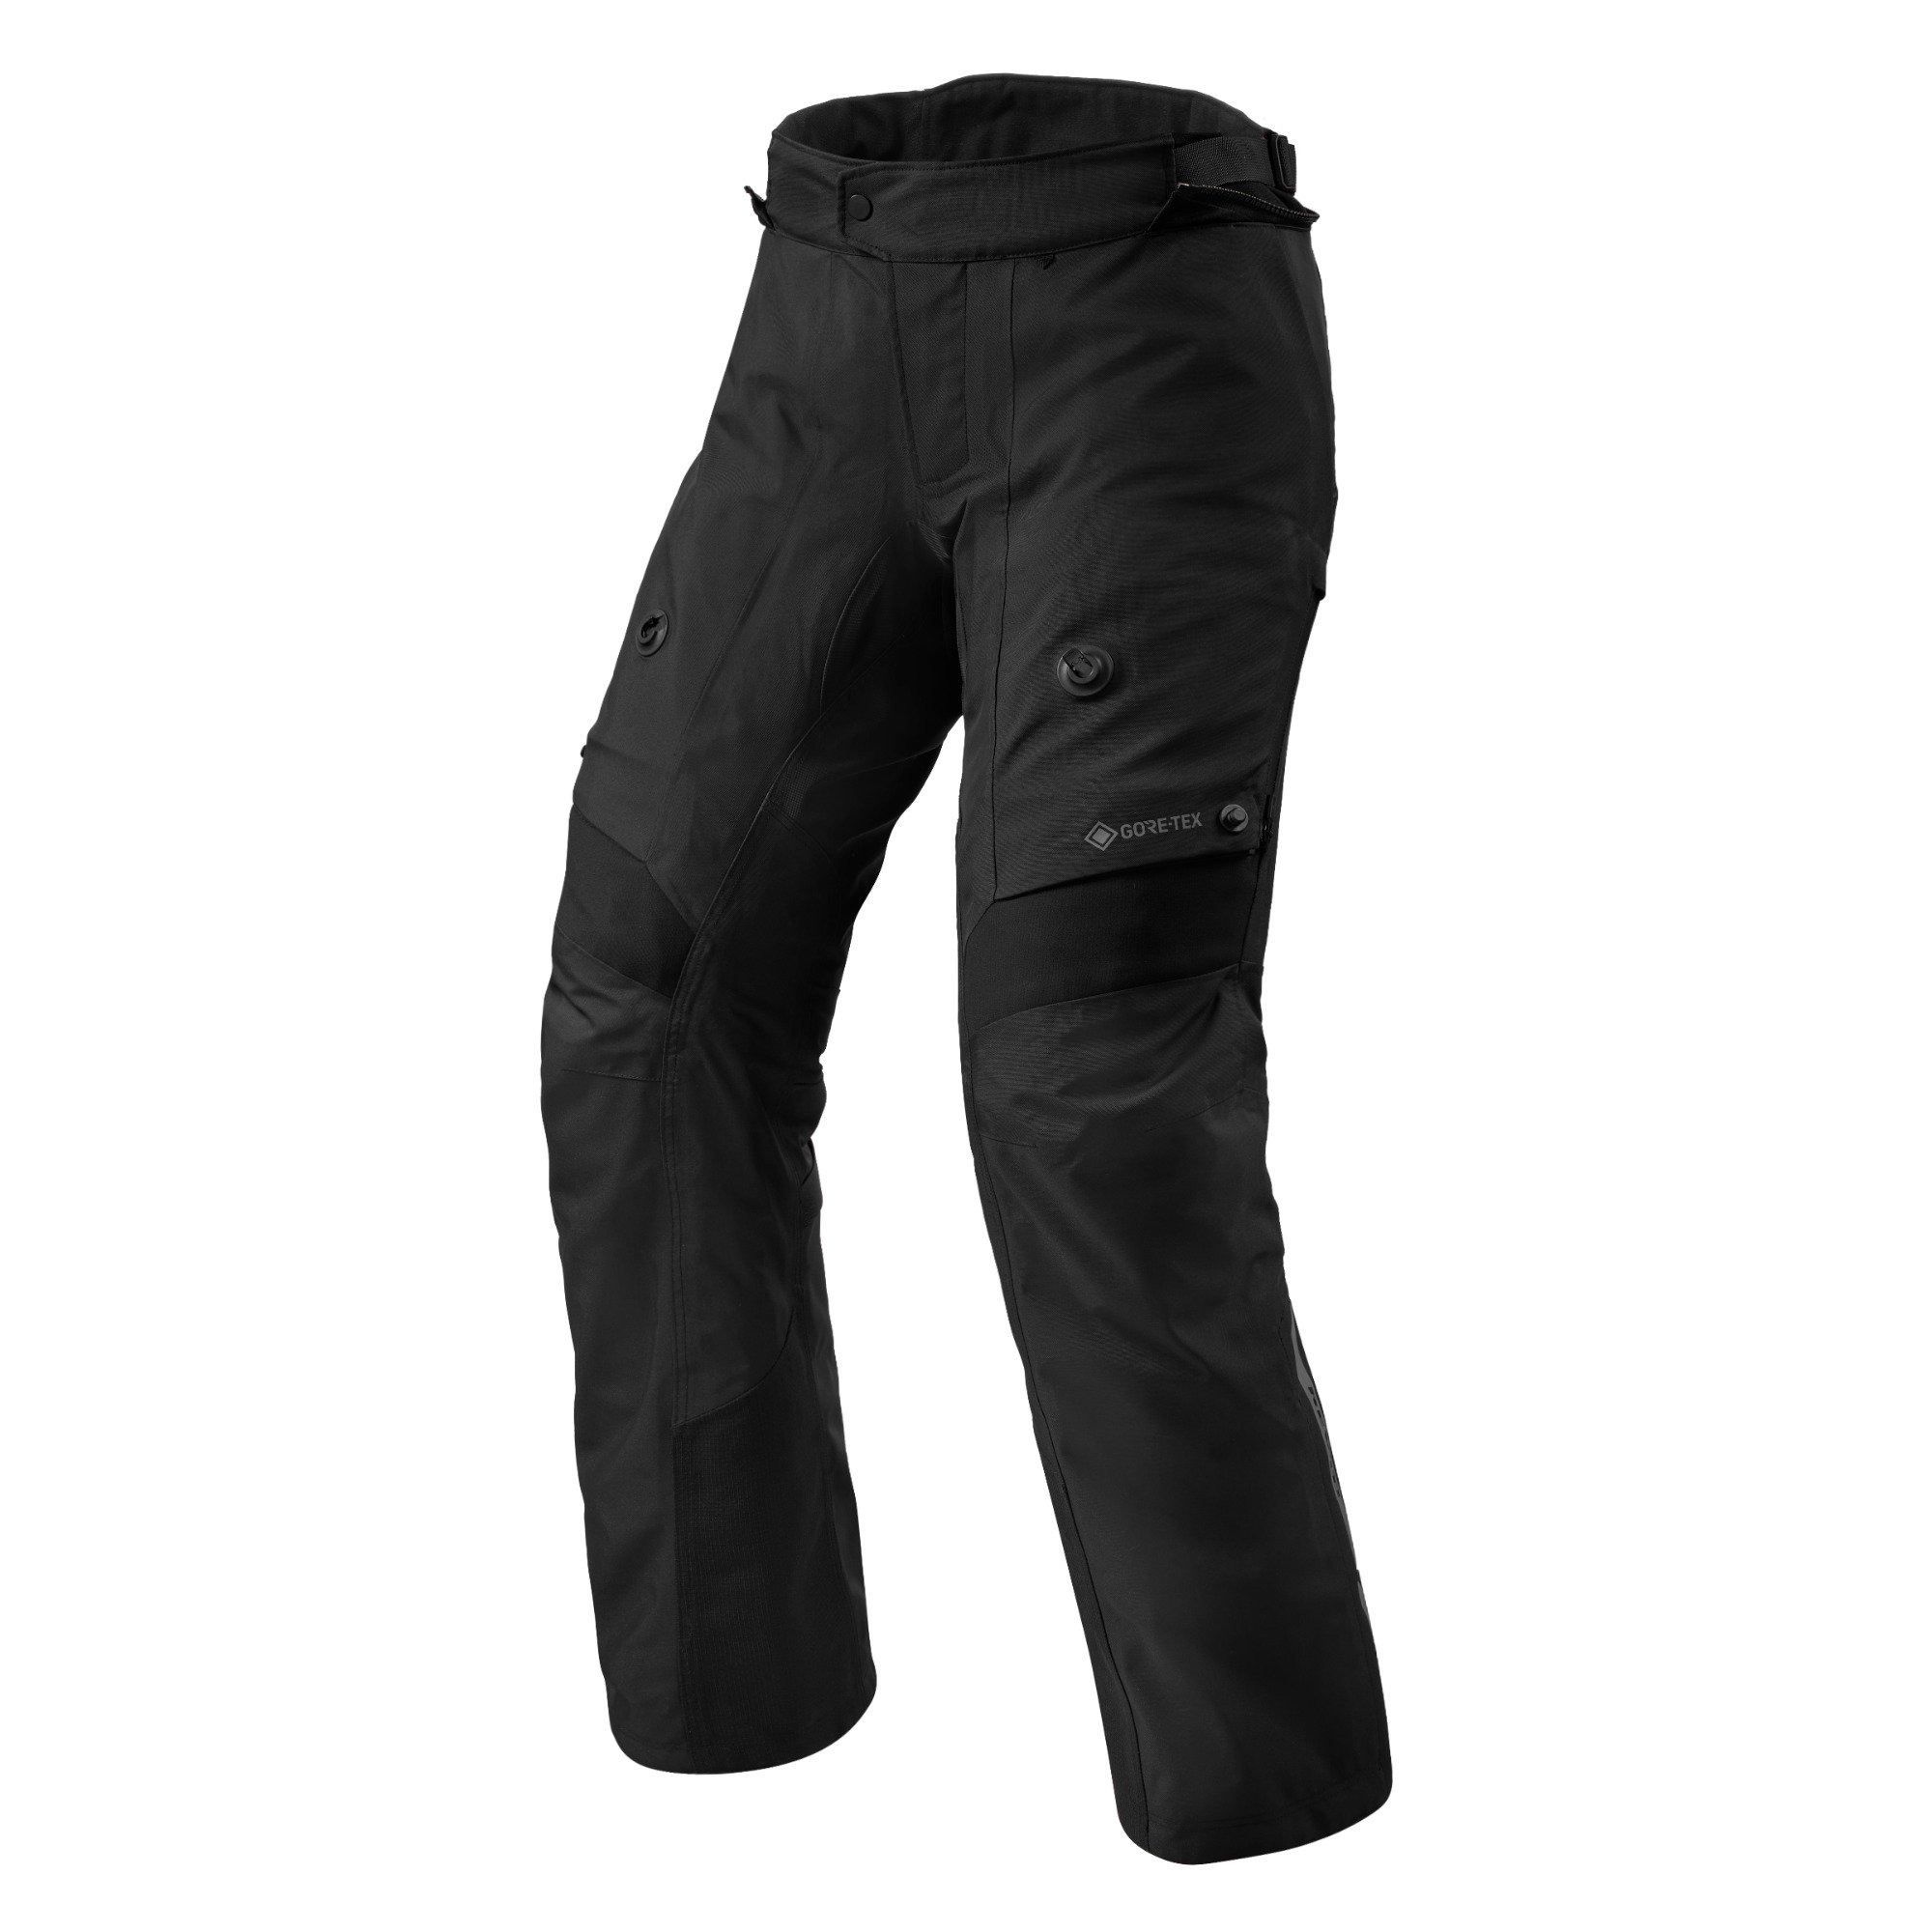 Image of REV'IT! Pants Poseidon 3 GTX Black Short Motorcycle Pants Size M ID 8700001362504